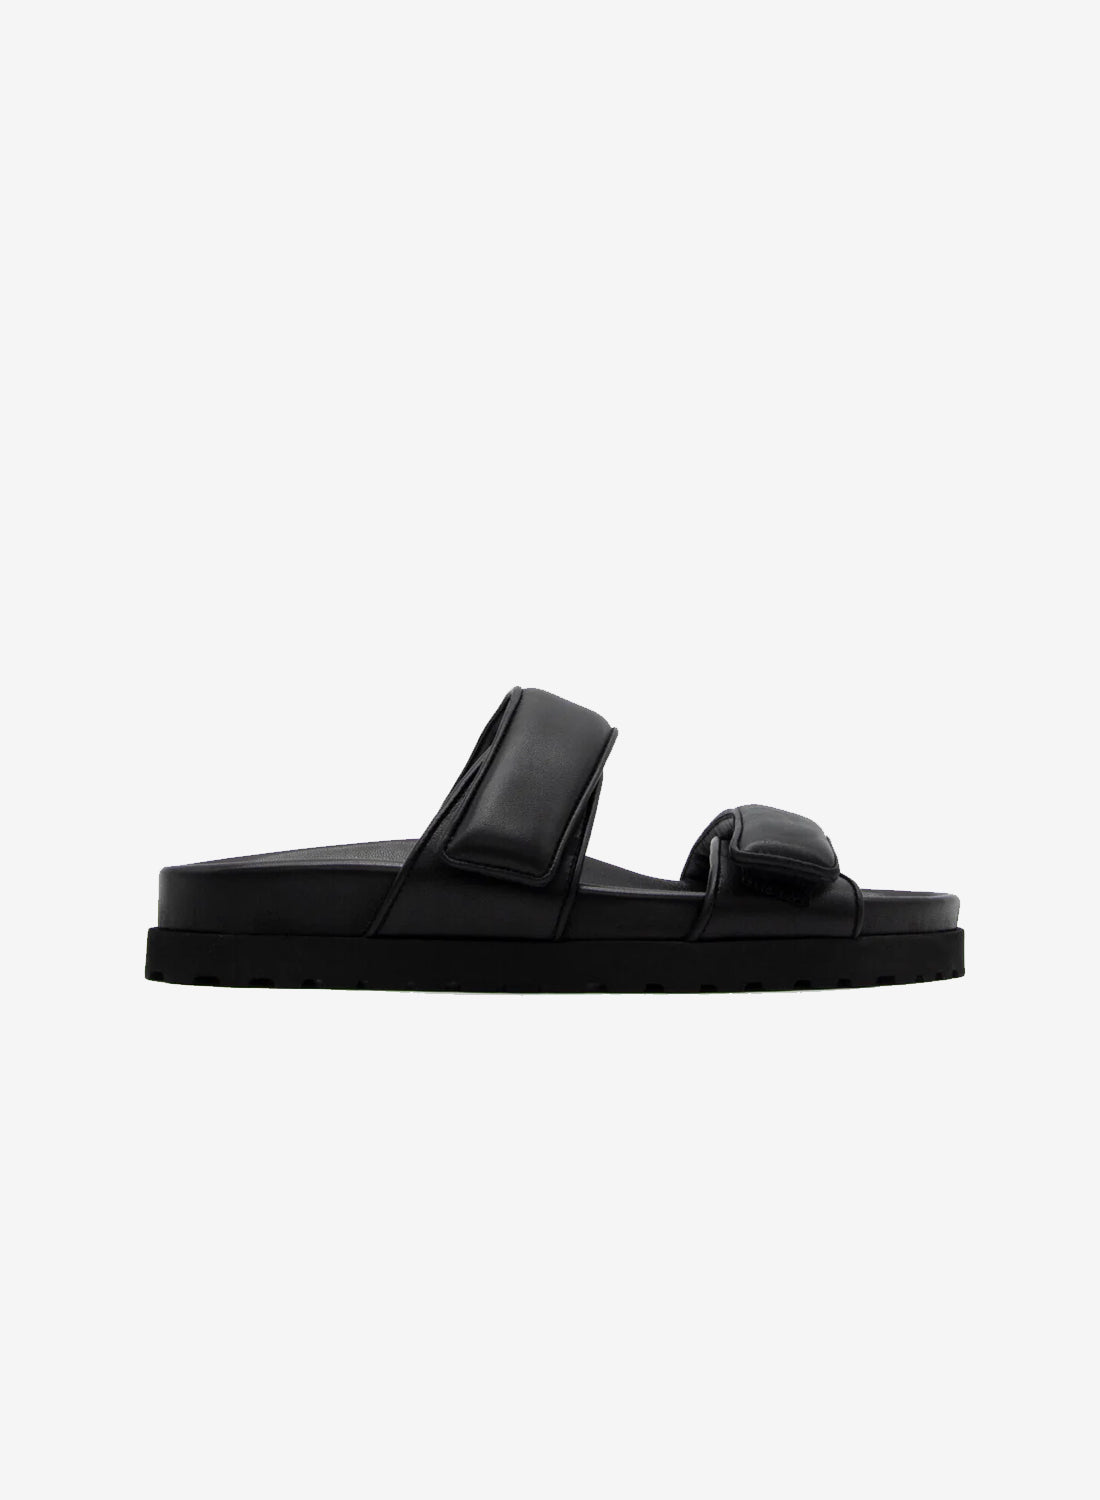 Perni 11 Double Strap Sandal All Black